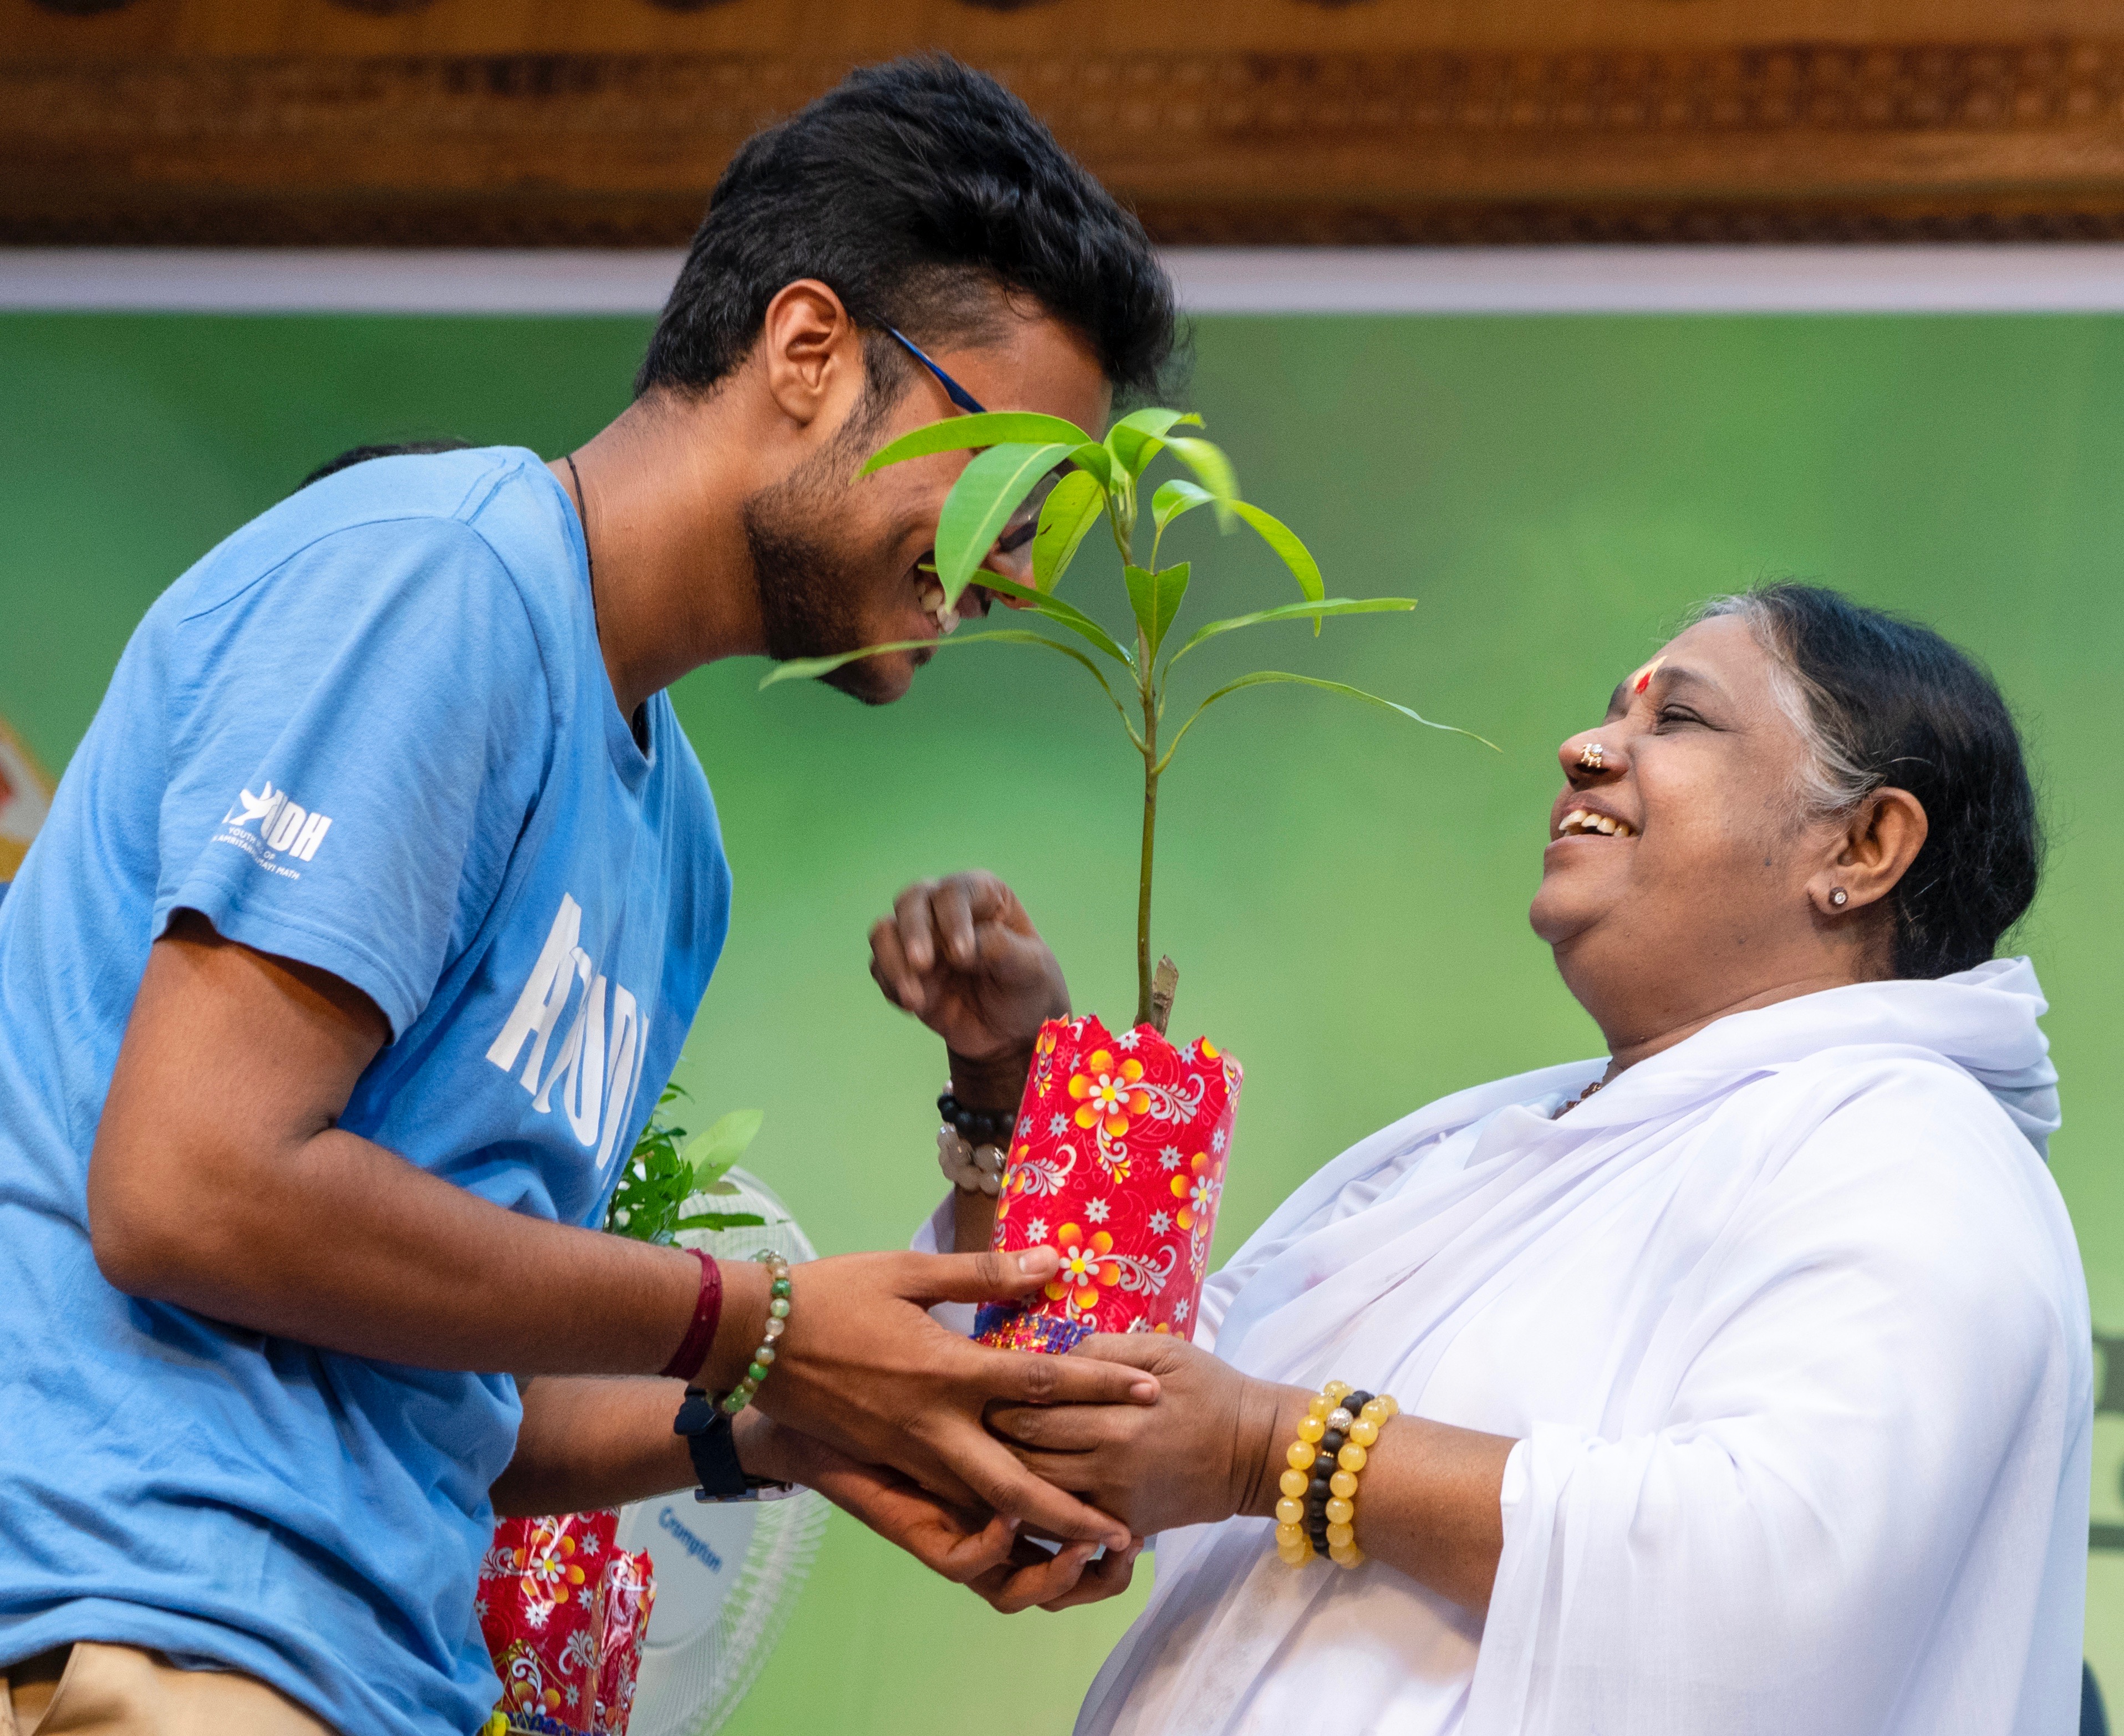 Photo of Amma distributing sapling to youth